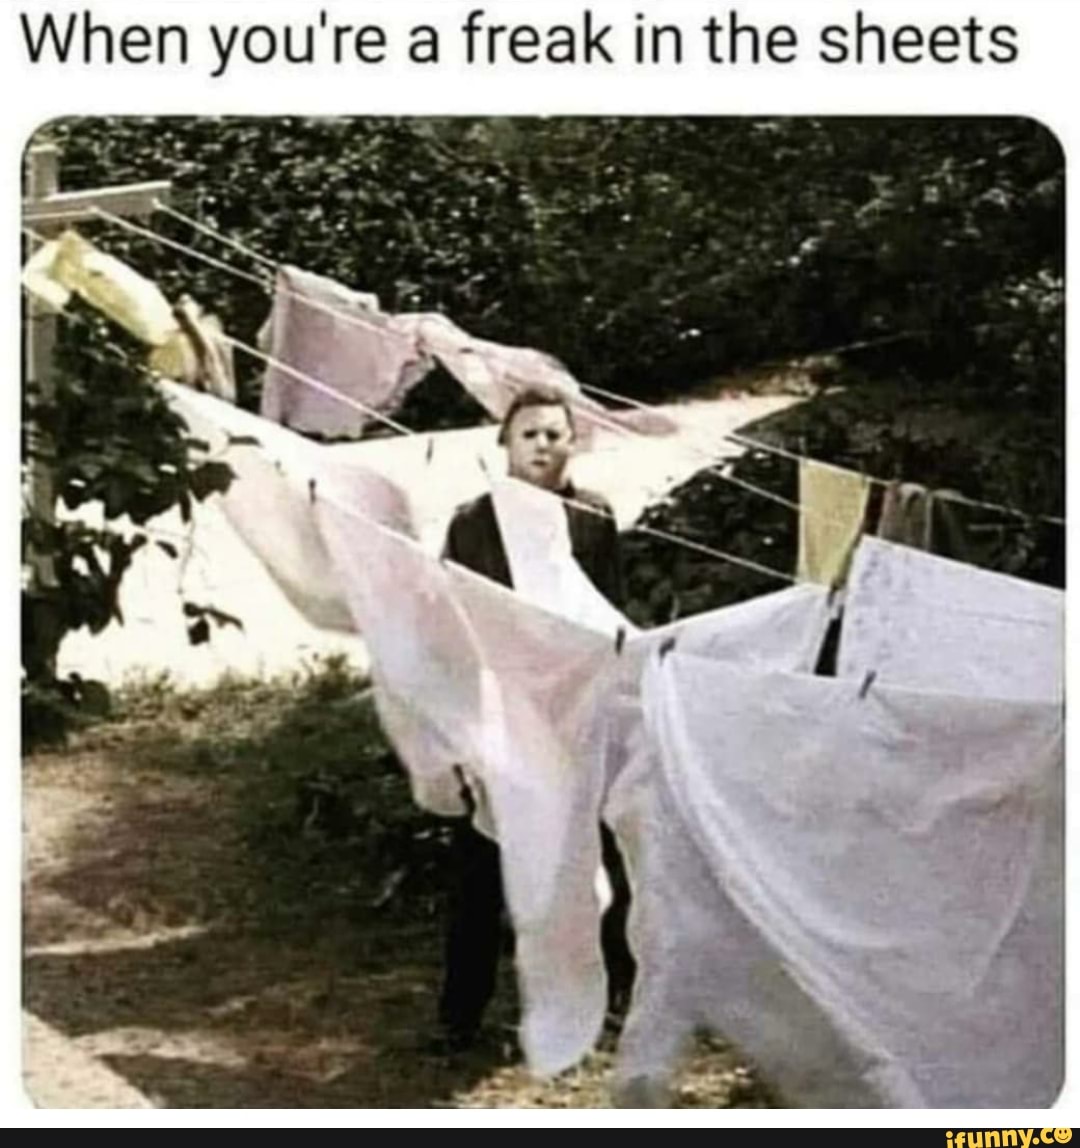 Freaks in the sheets